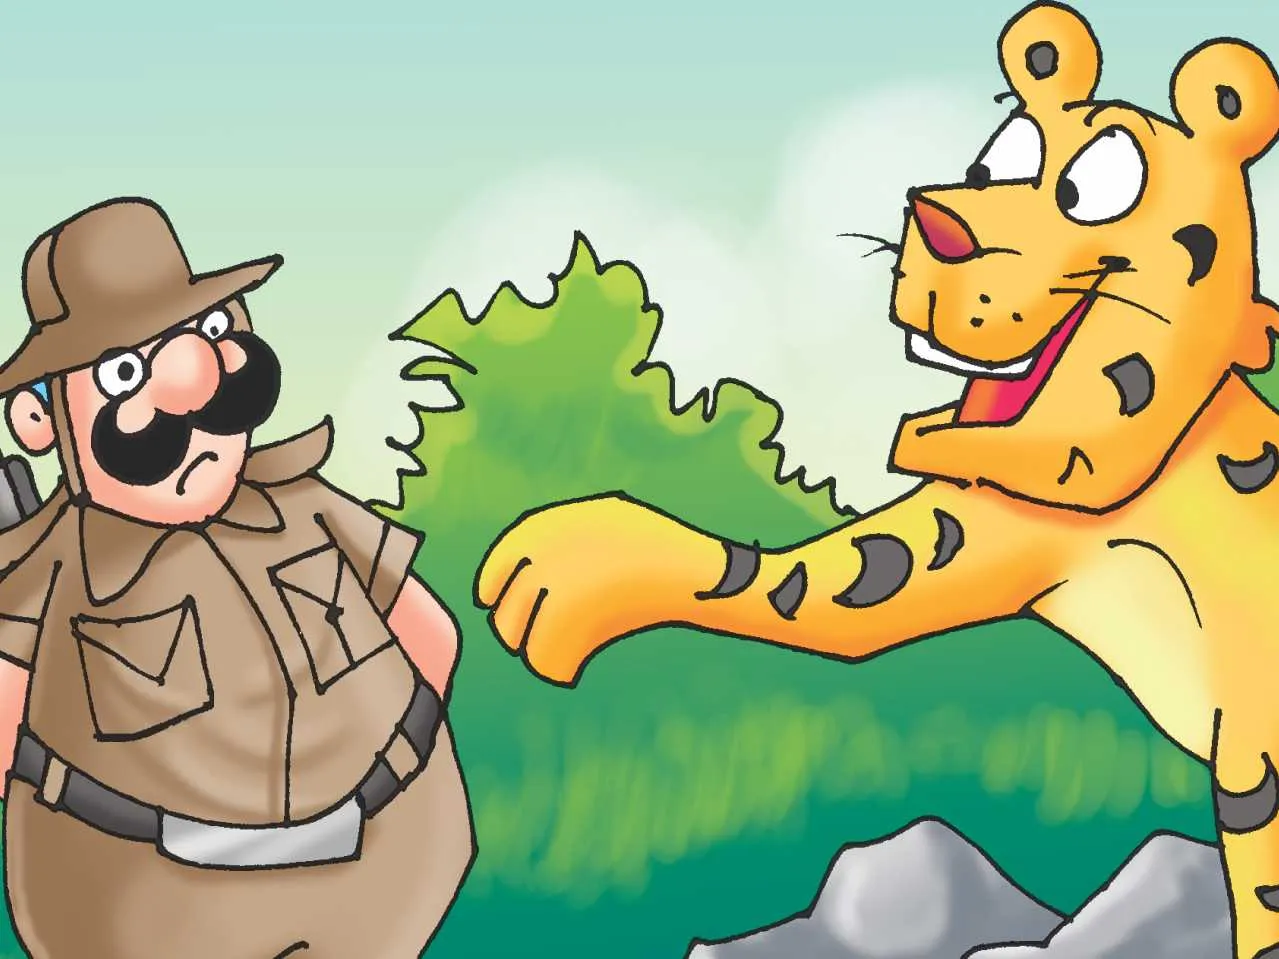 Hunter and tiger cartoon image